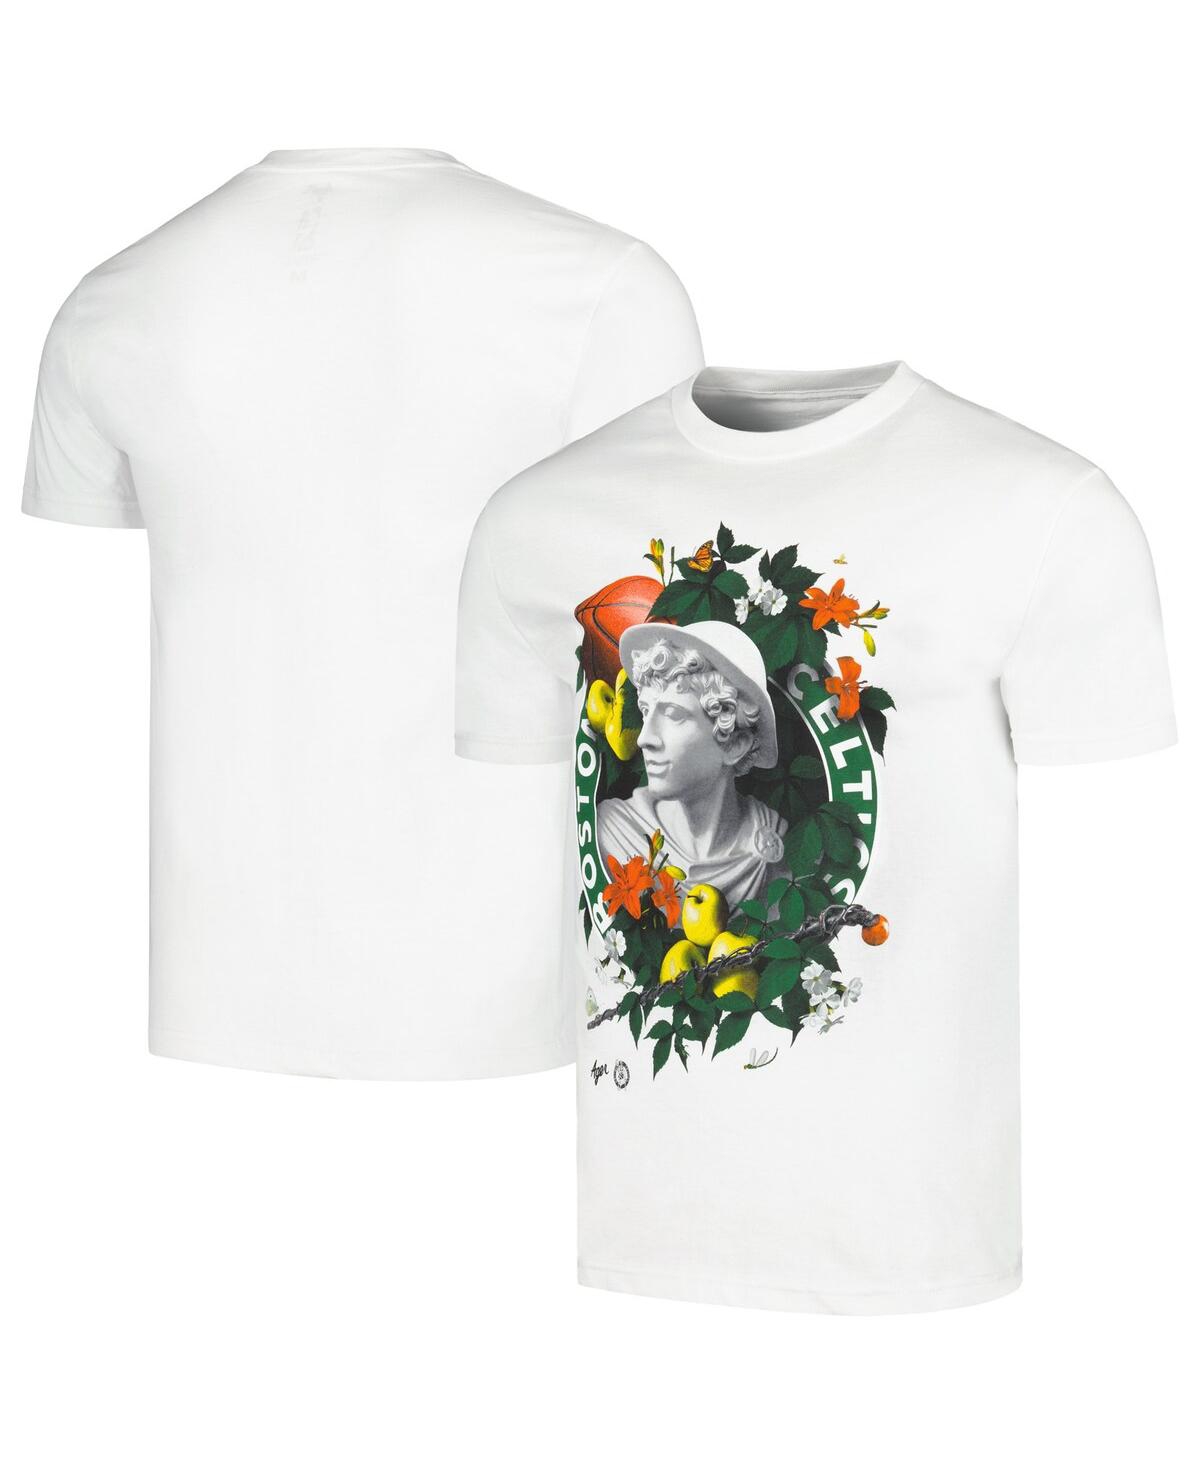 Men's and Women's Nba x Kathy AgerÂ White Boston Celtics Identify Artist Series T-shirt - White